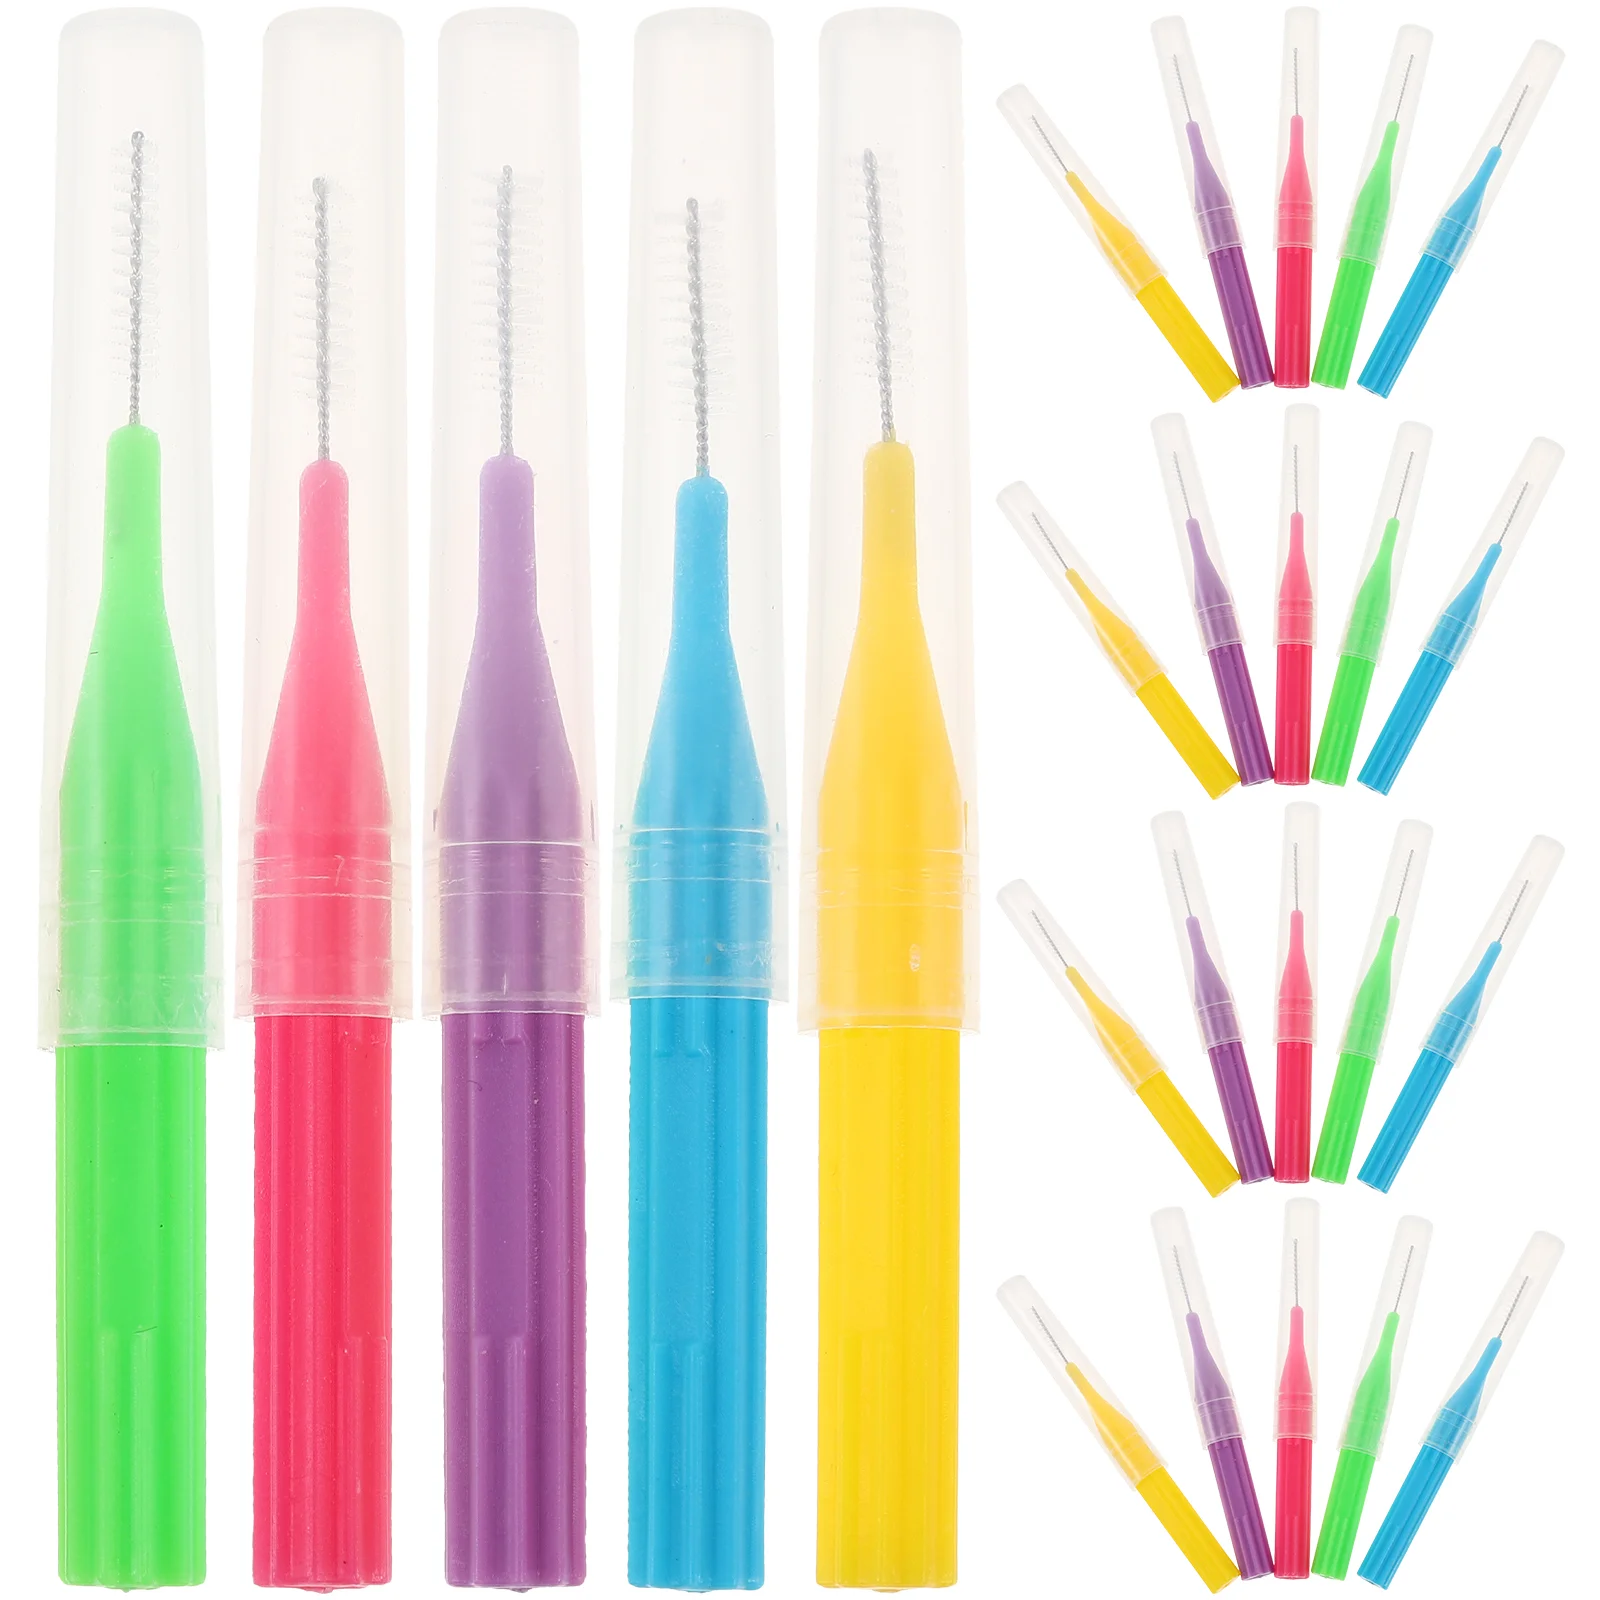 

Braces Brush Interdental Brushes Teeth Cleaning Hygiene Flosser Cleaners Kit Gum Picks Tooth